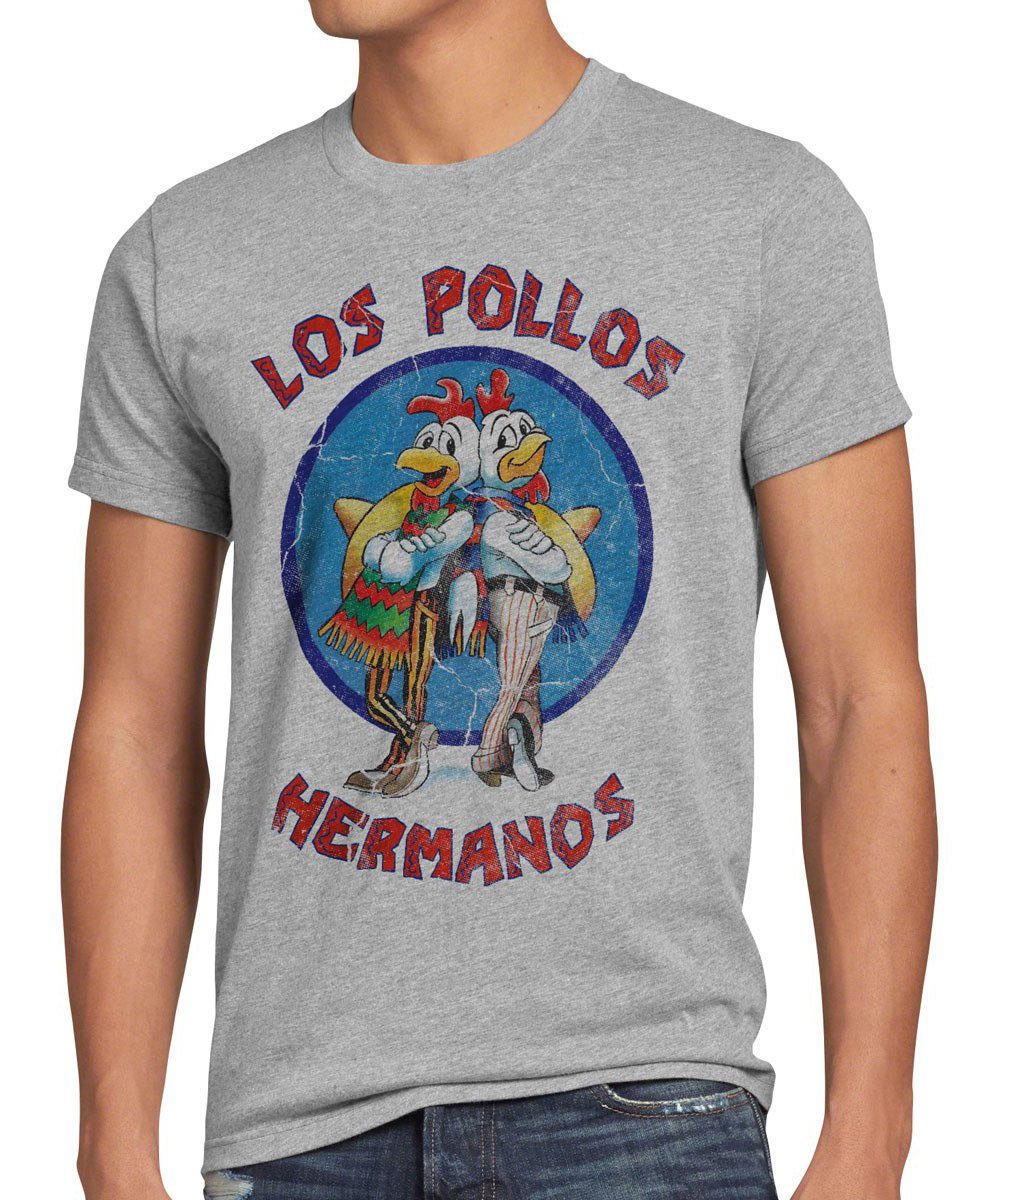 style3 Print-Shirt Herren T-Shirt Los Pollos breaking hermanos heisenberg walter bad white chicken grau meliert